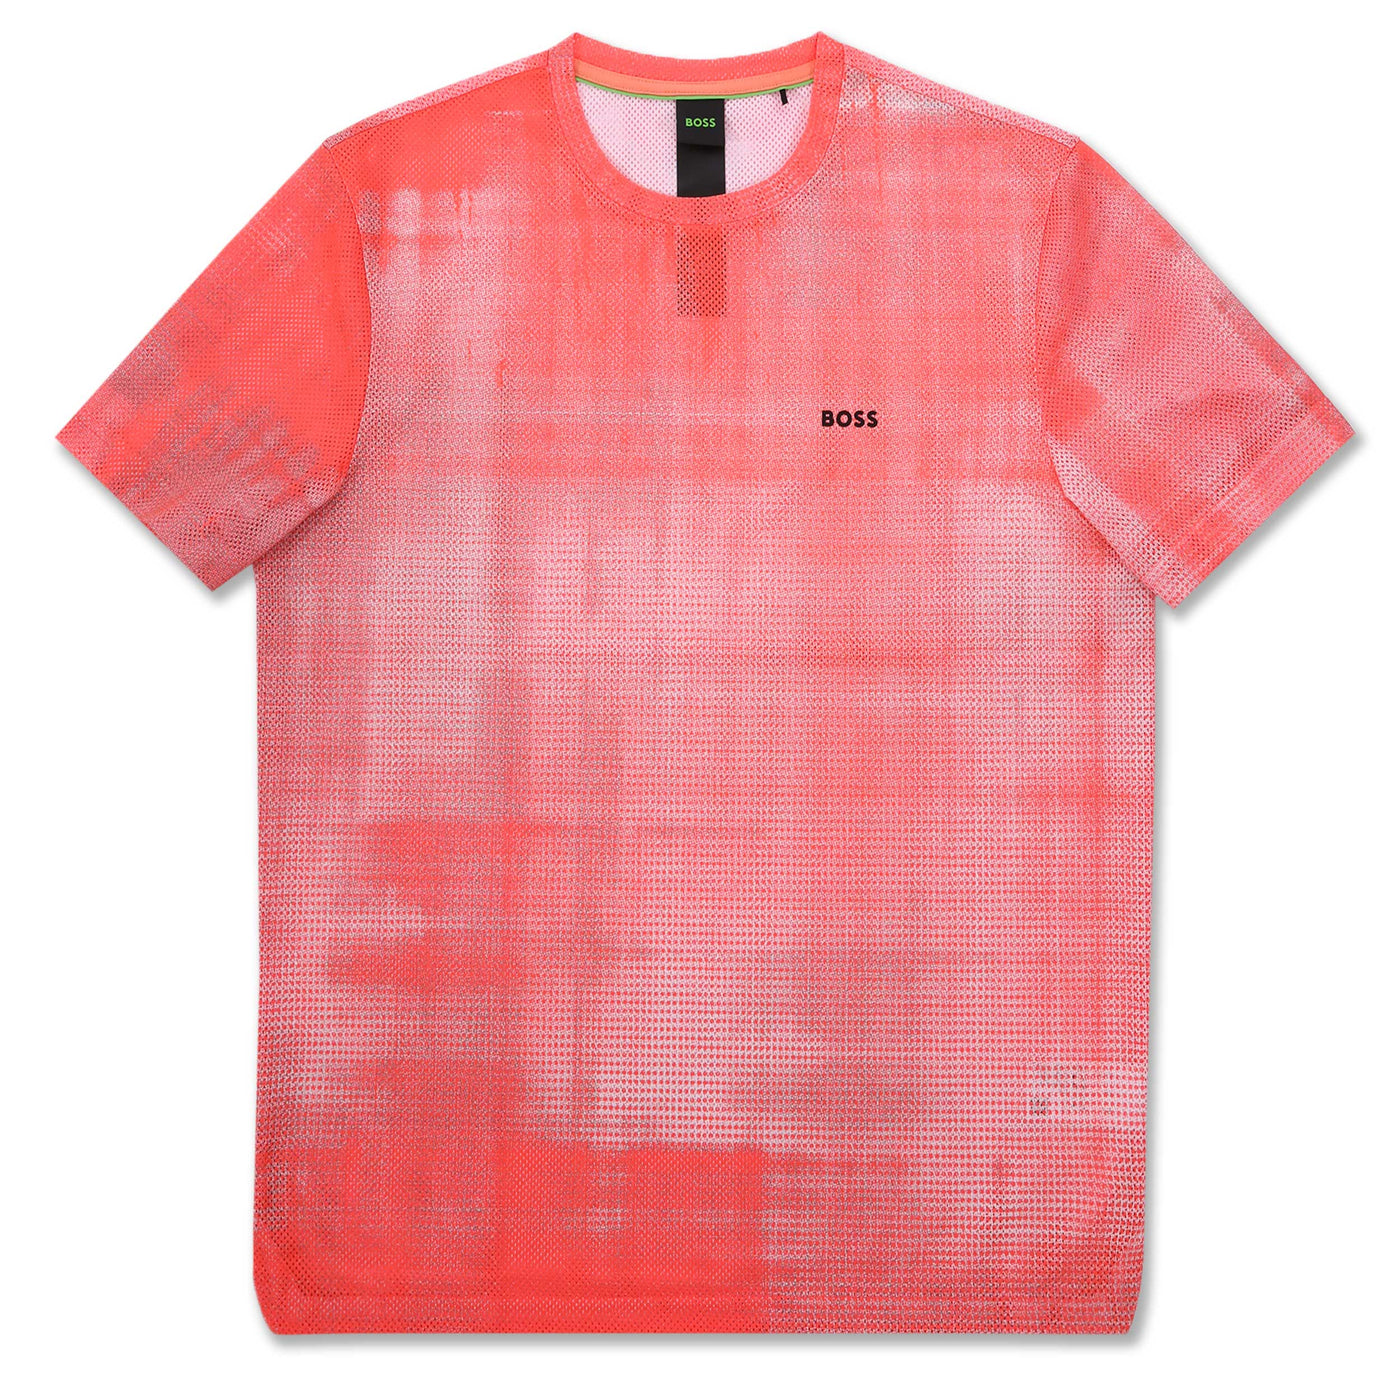 BOSS Teebero 3 T Shirt in Open Red